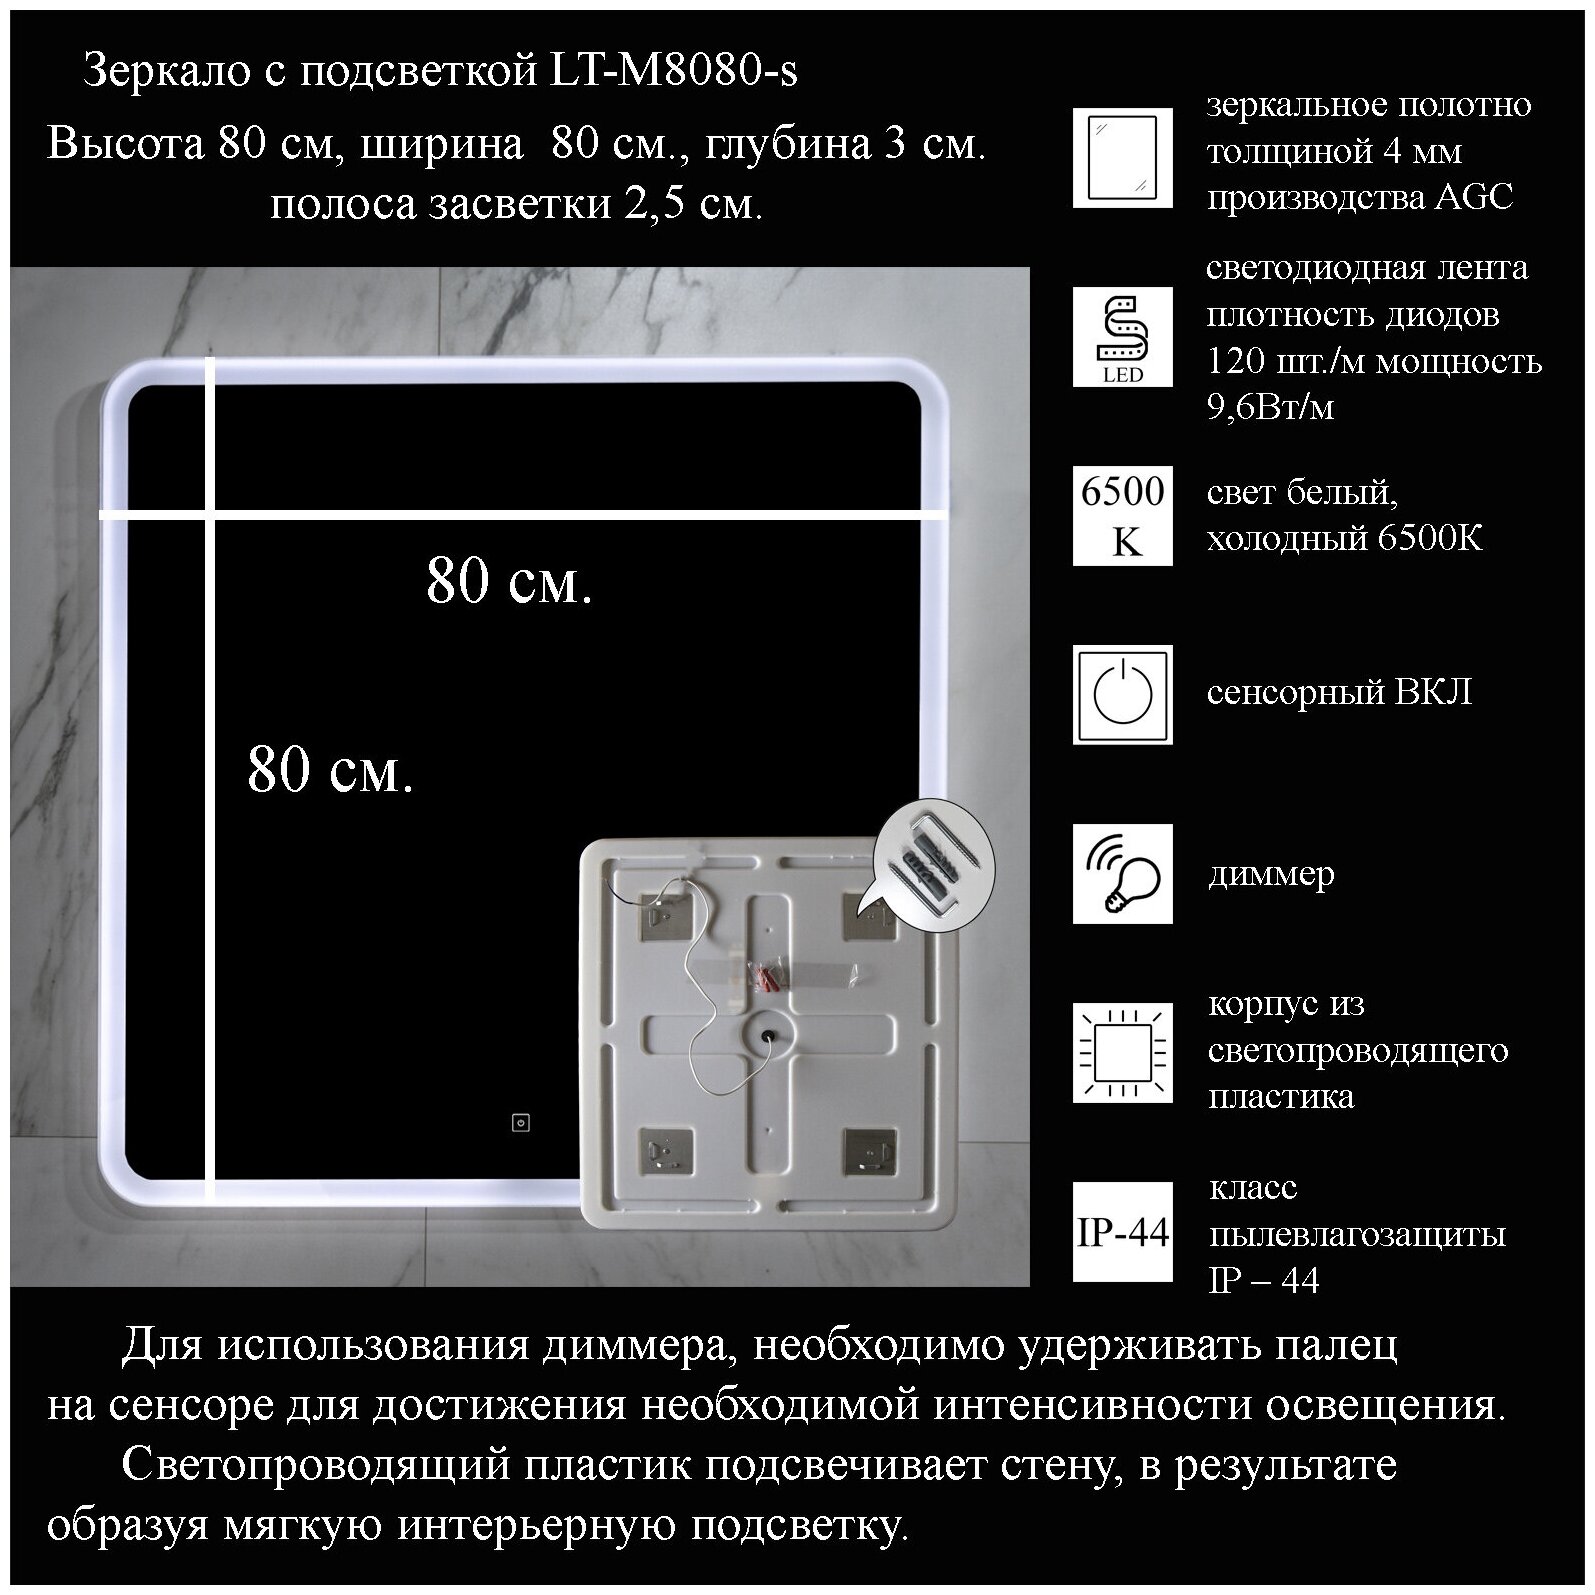 Зеркало La Tezza с LED подсветкой, сенсорный включатель с диммером, IP - 44, 800х800 (ШВ) арт. LT-M8080-s